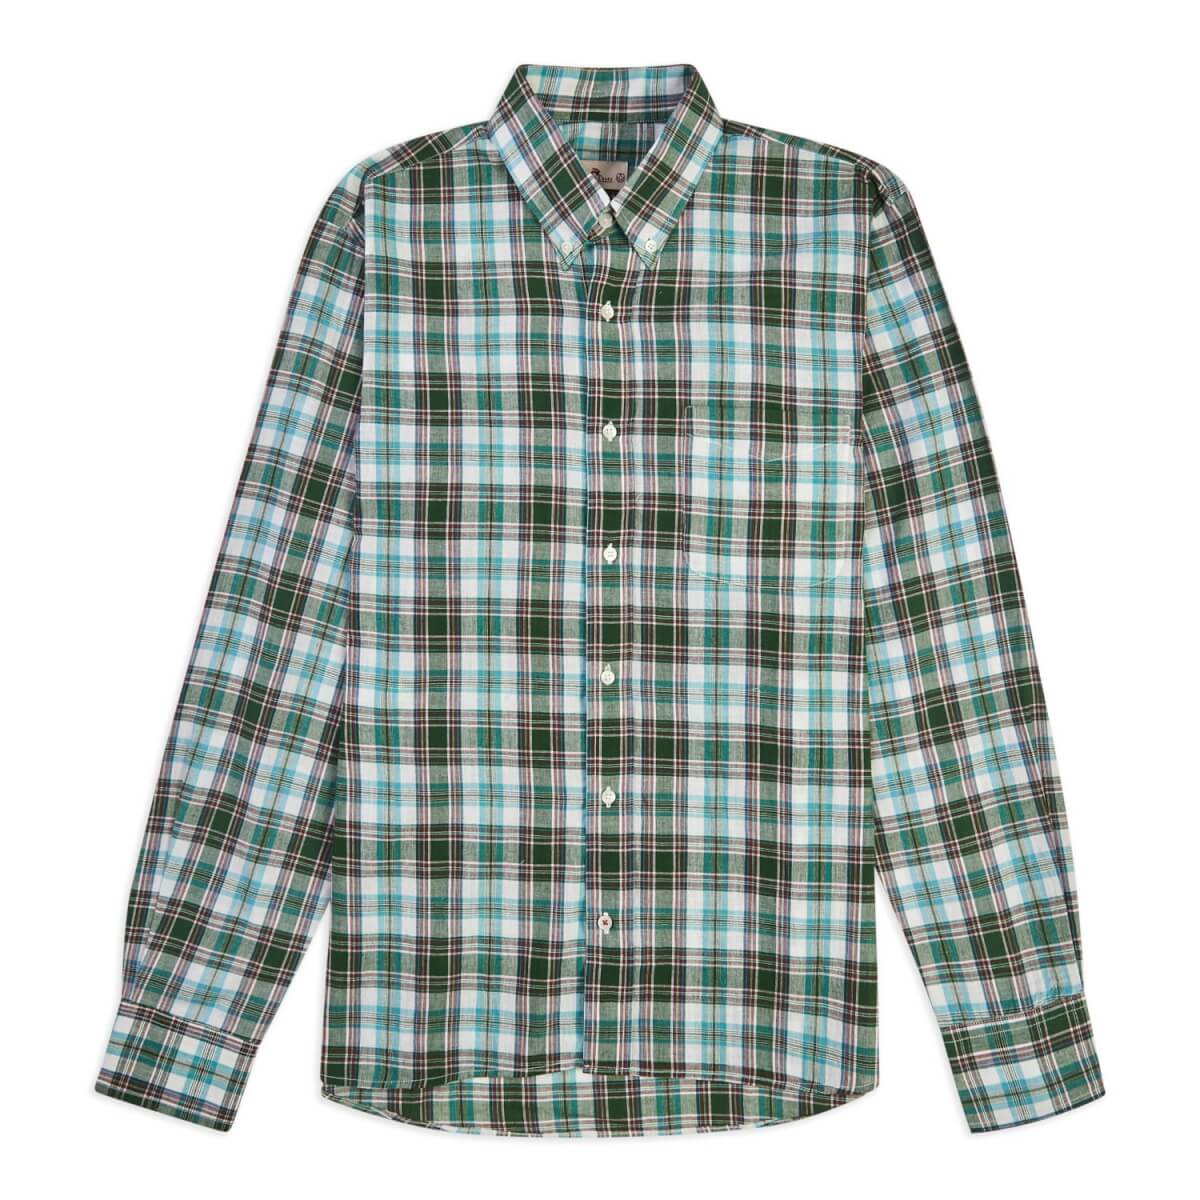 Men's Check Button Down Shirt - Green Small Burrows & Hare